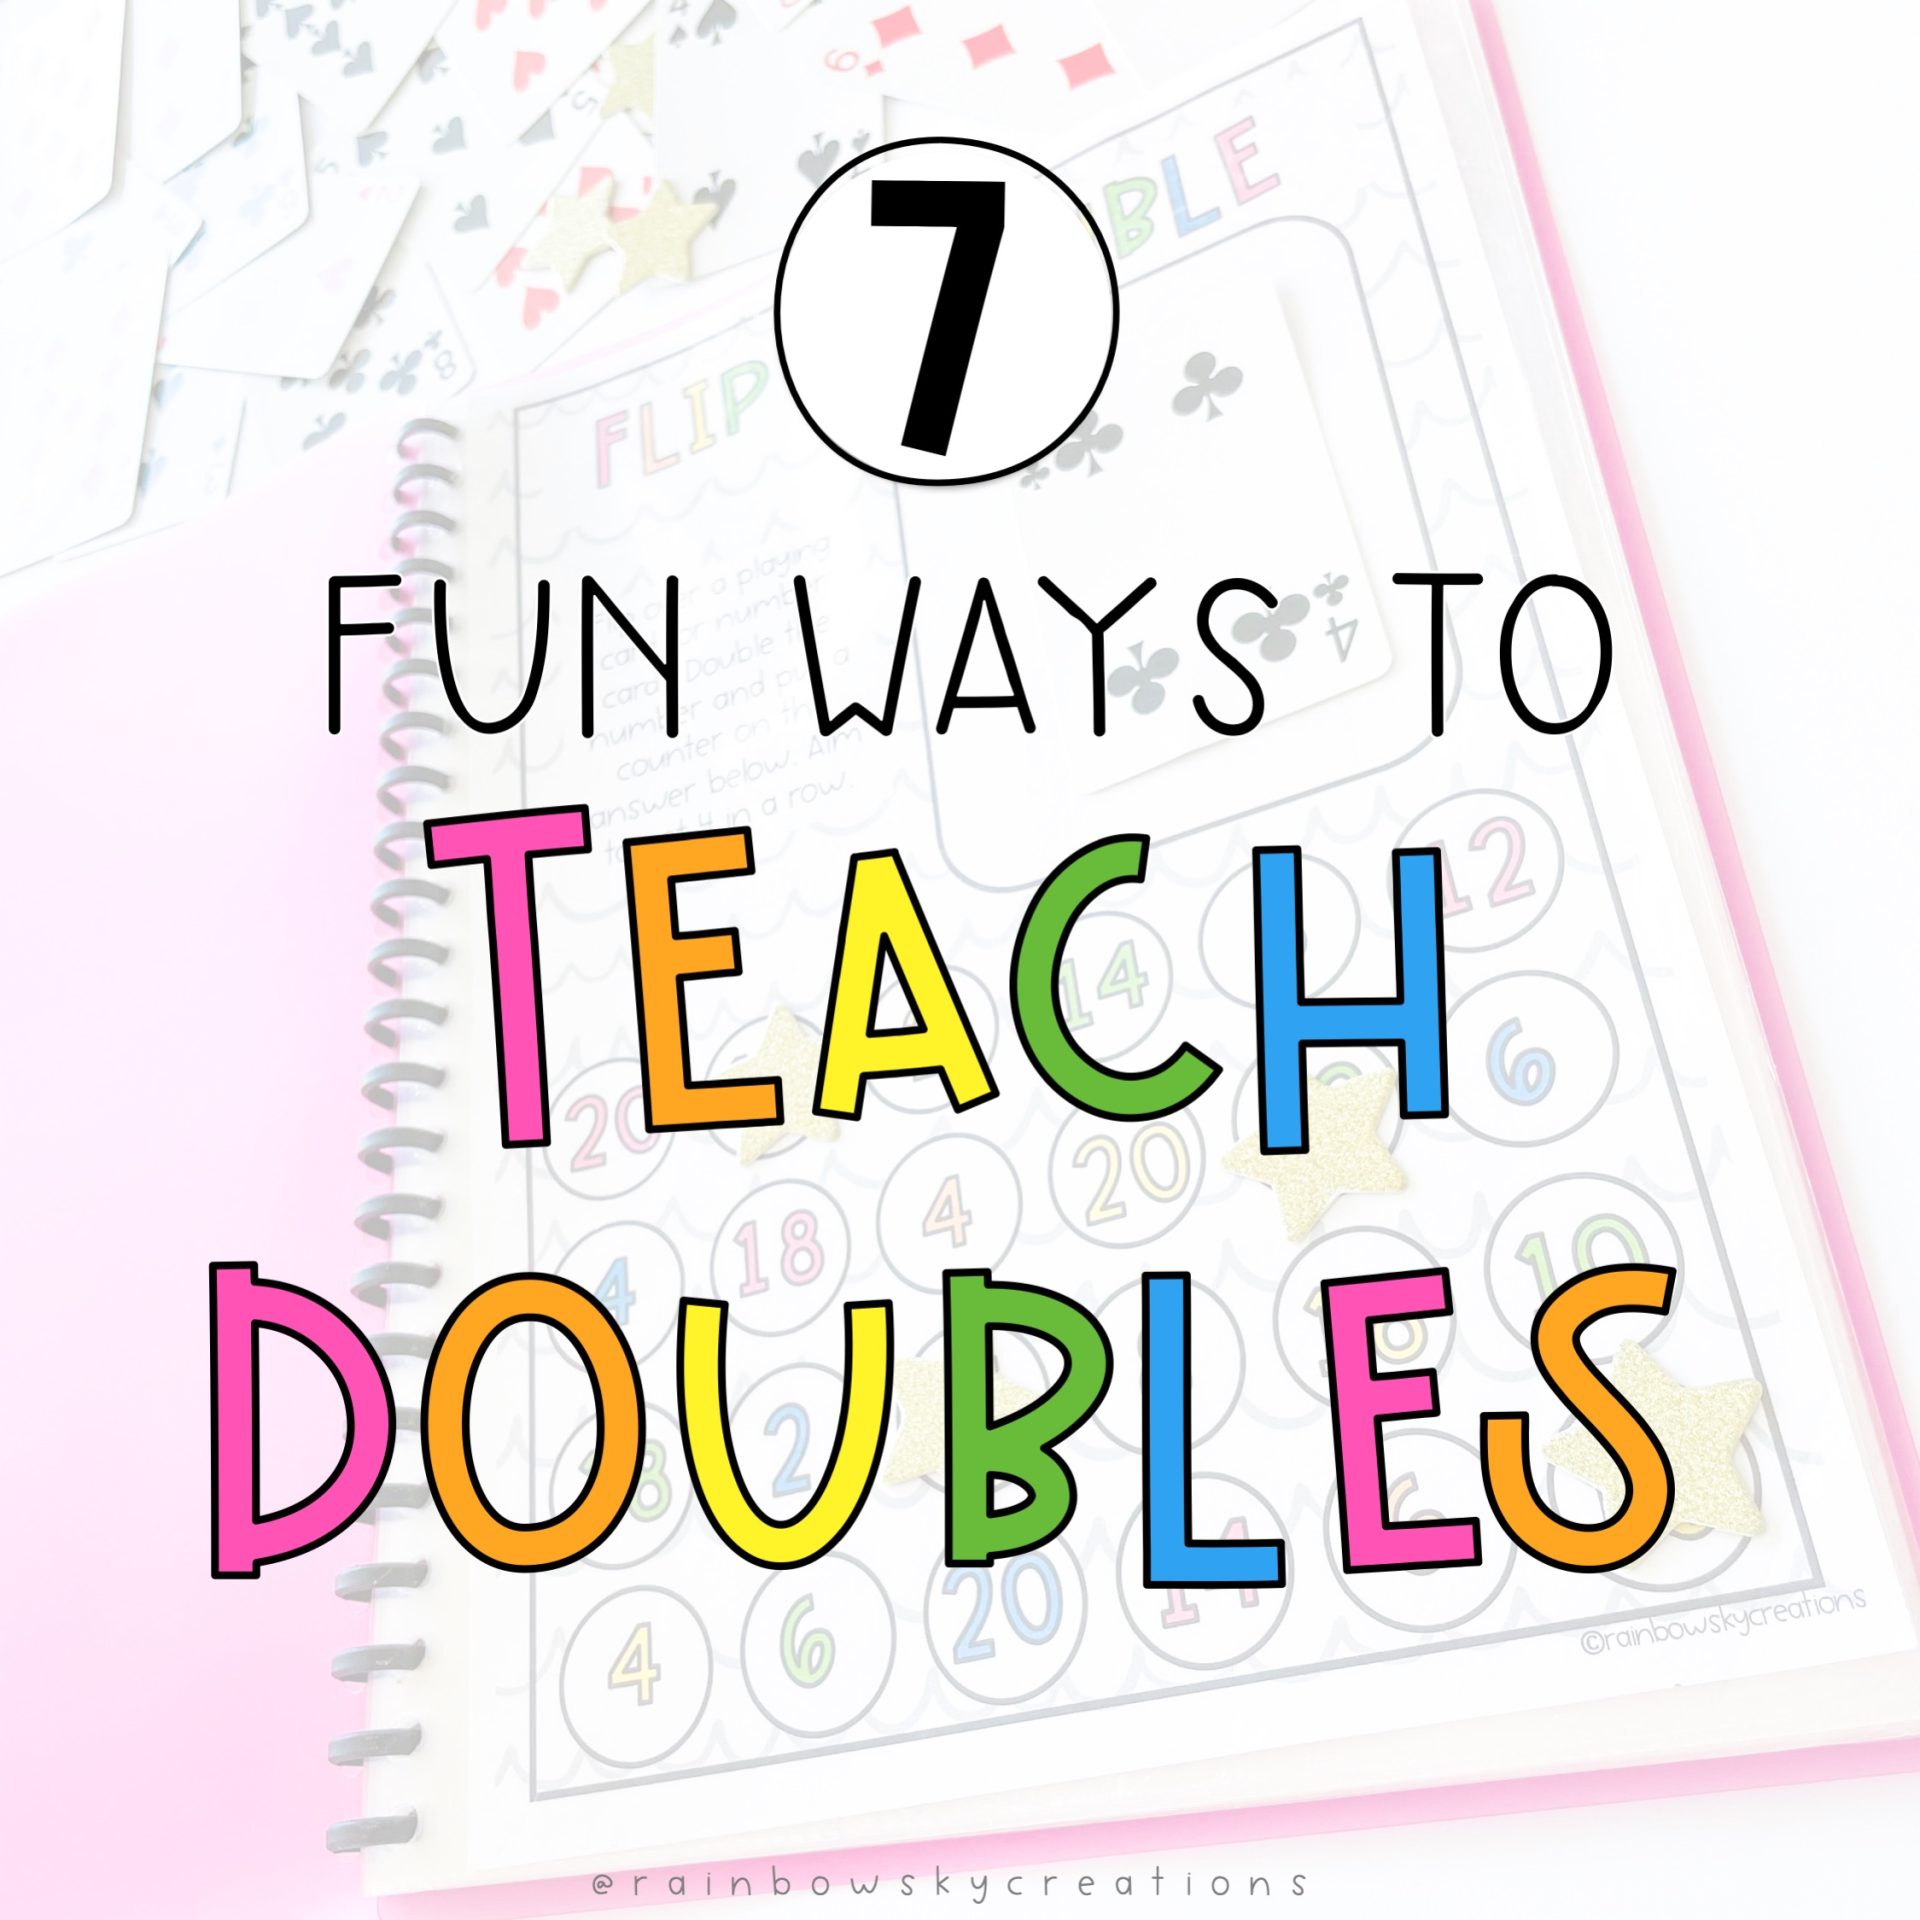 7 fun ways to teach doubles